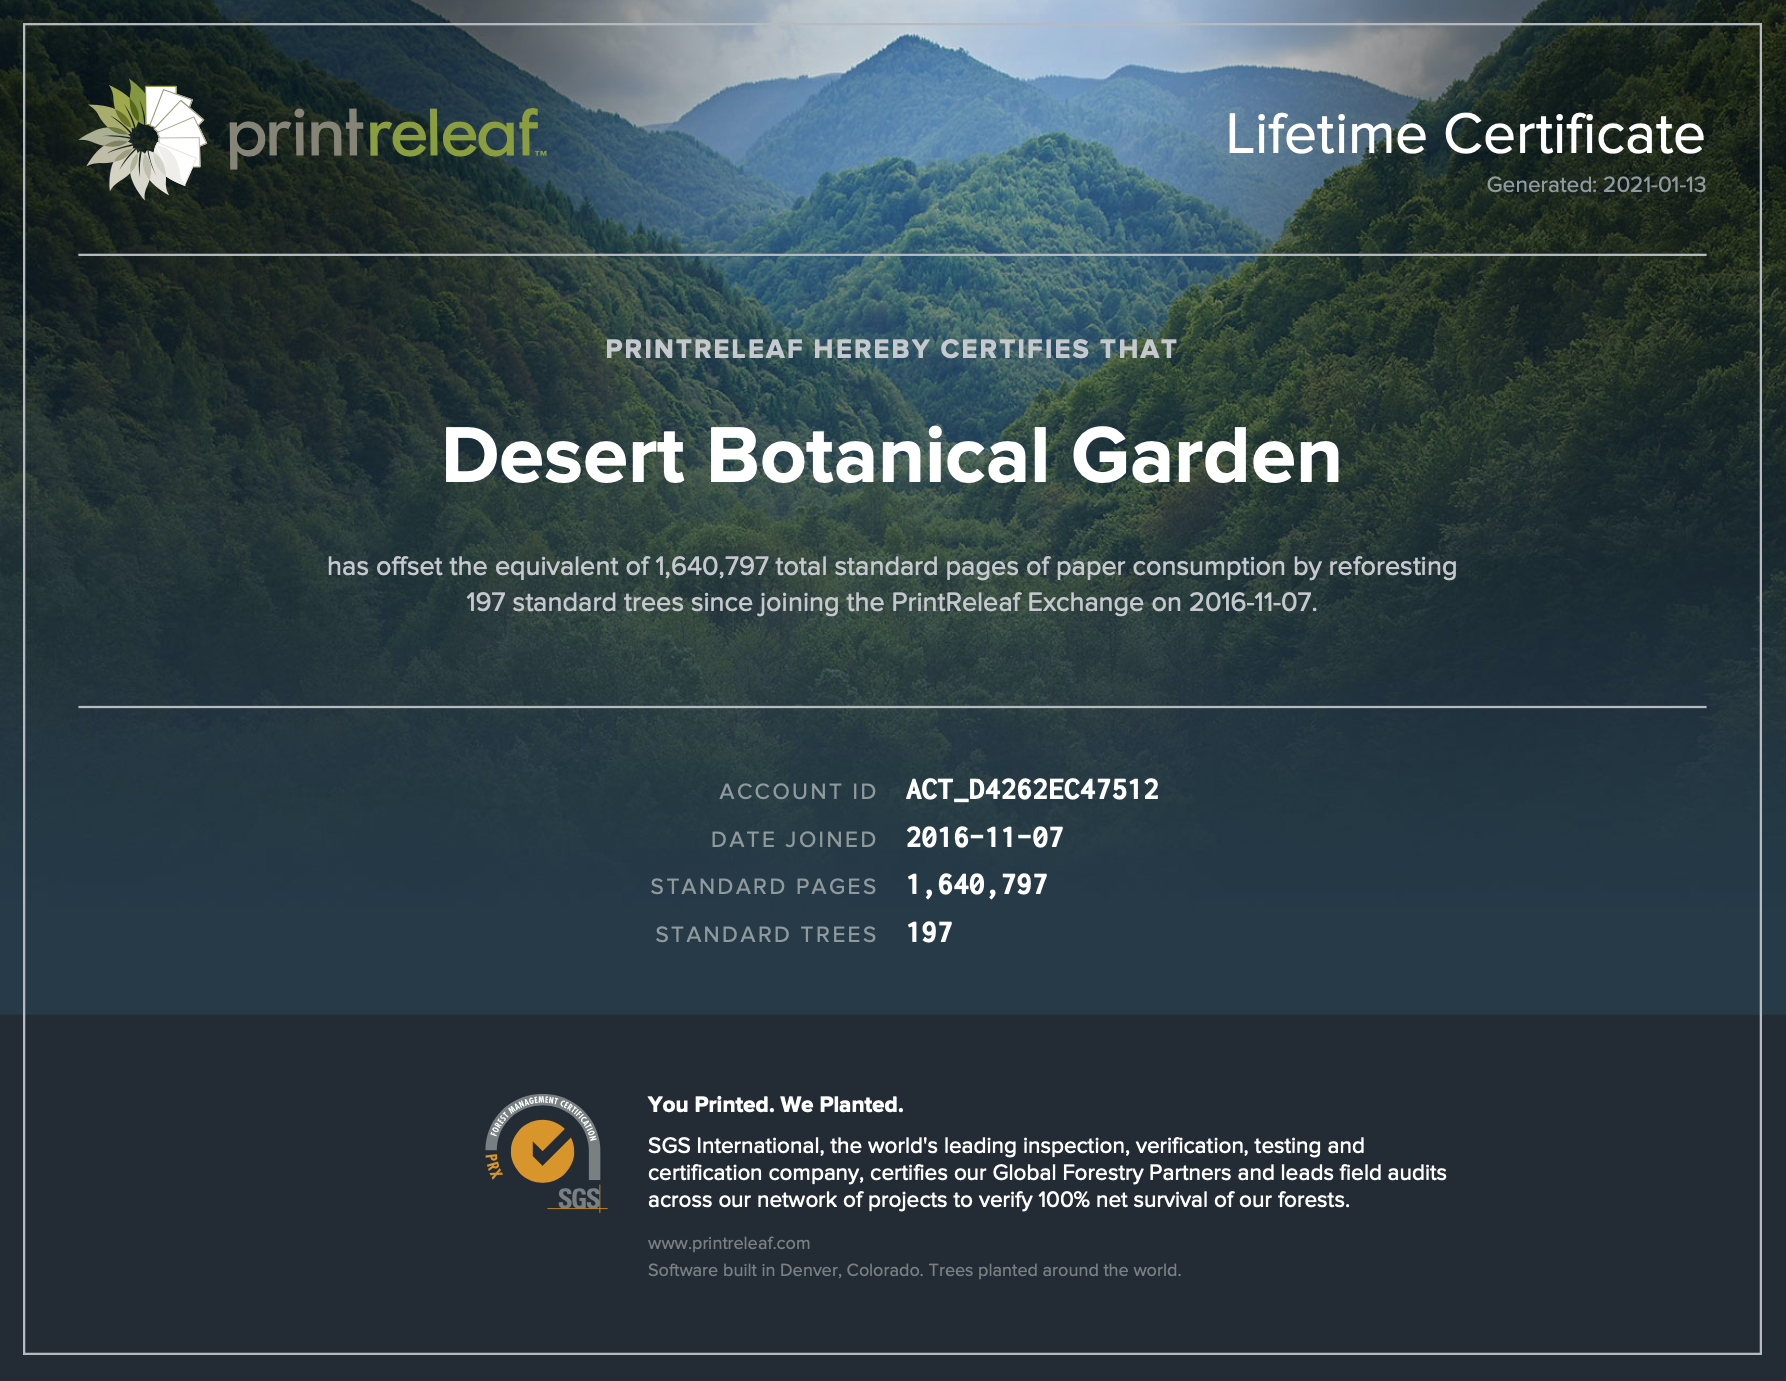 Desert Botanical Garden PrintReleaf Certificate